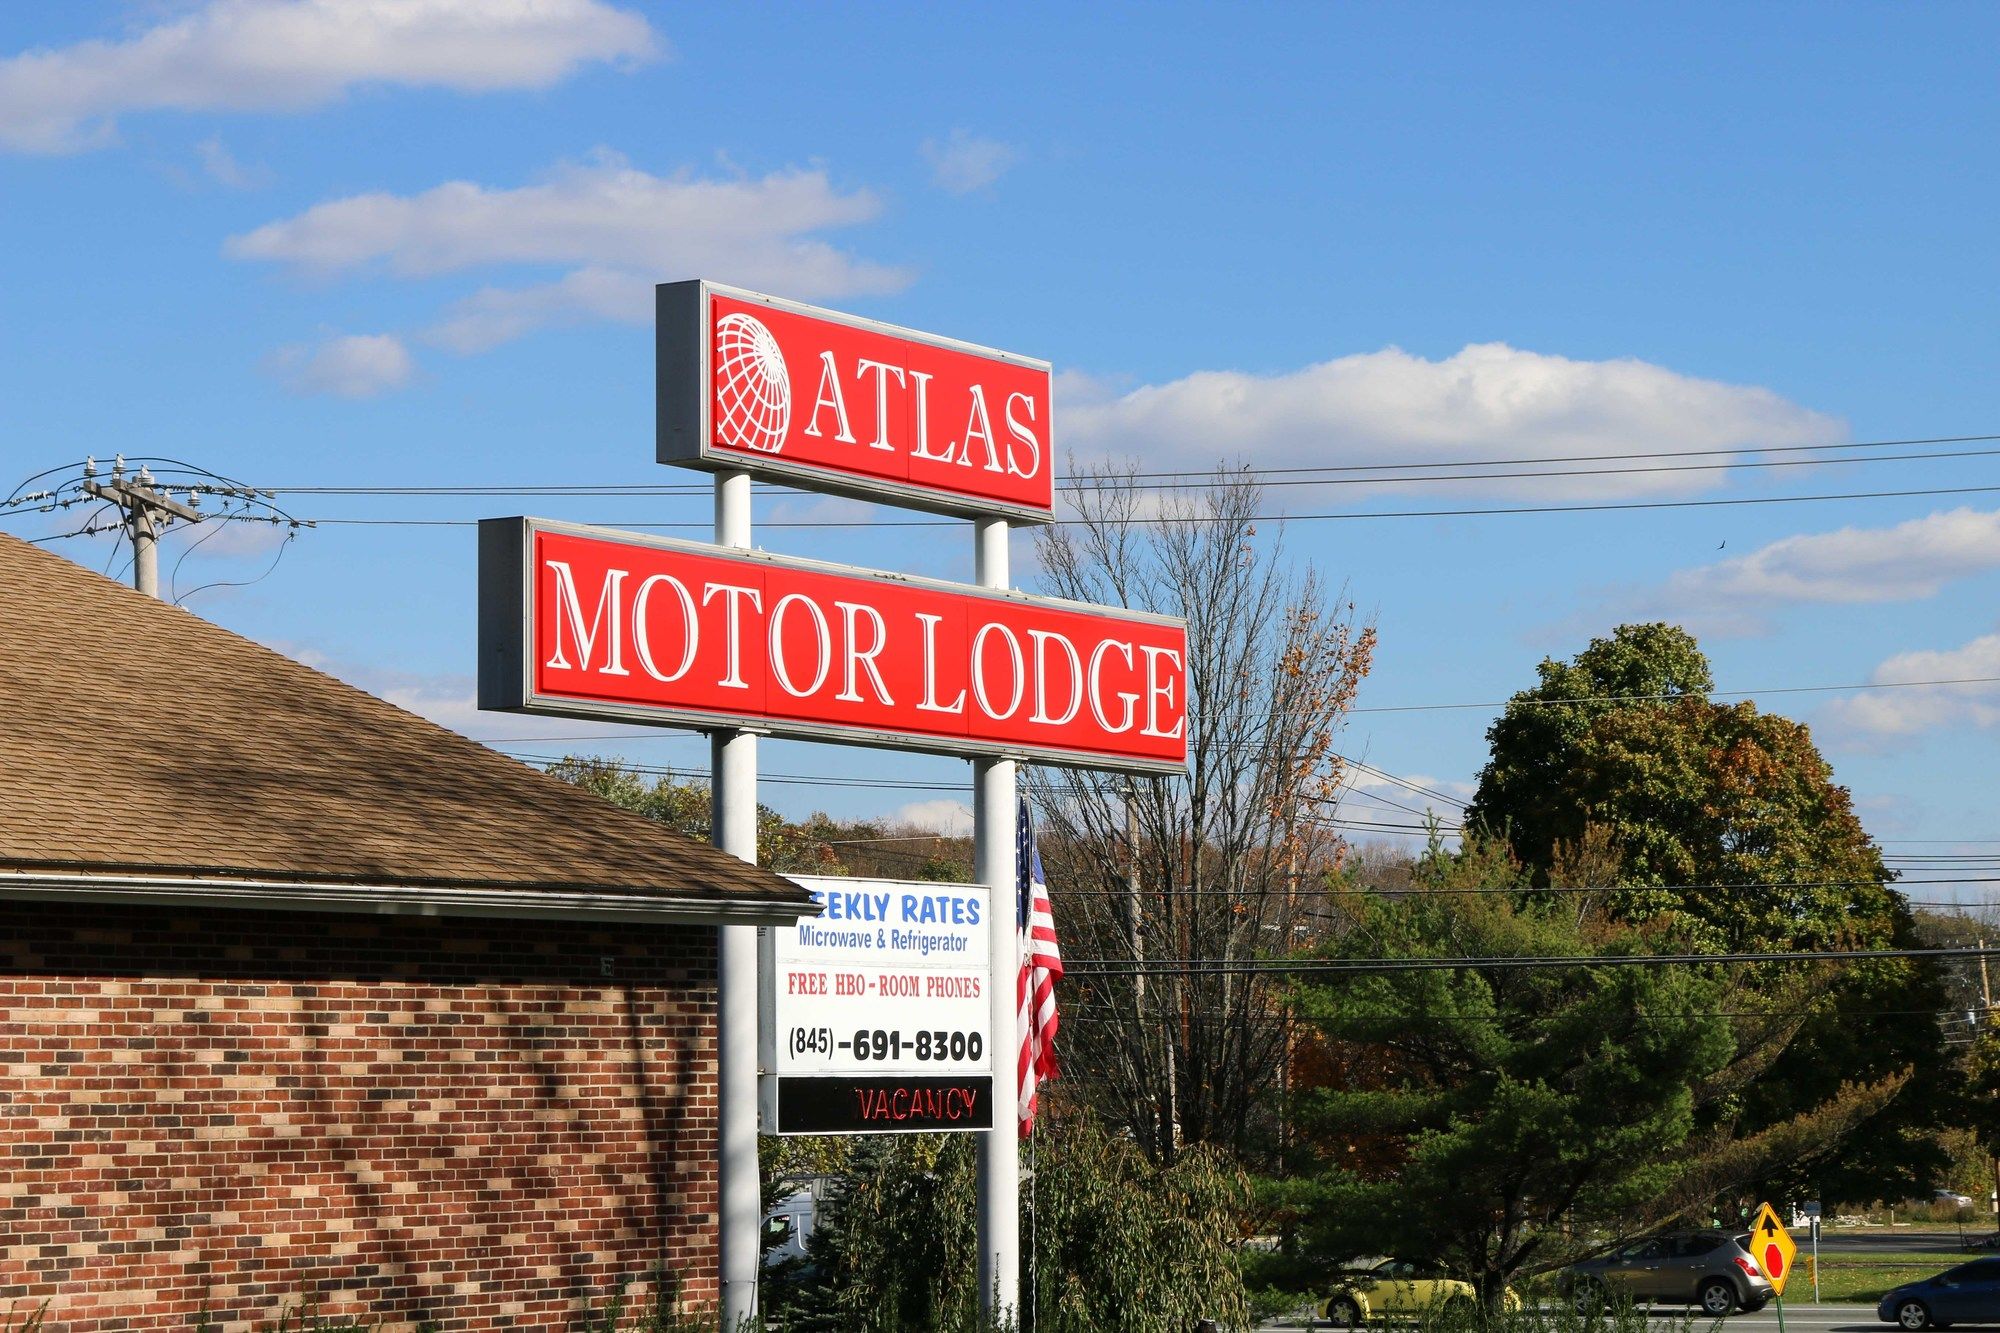 Atlas Motor Lodge